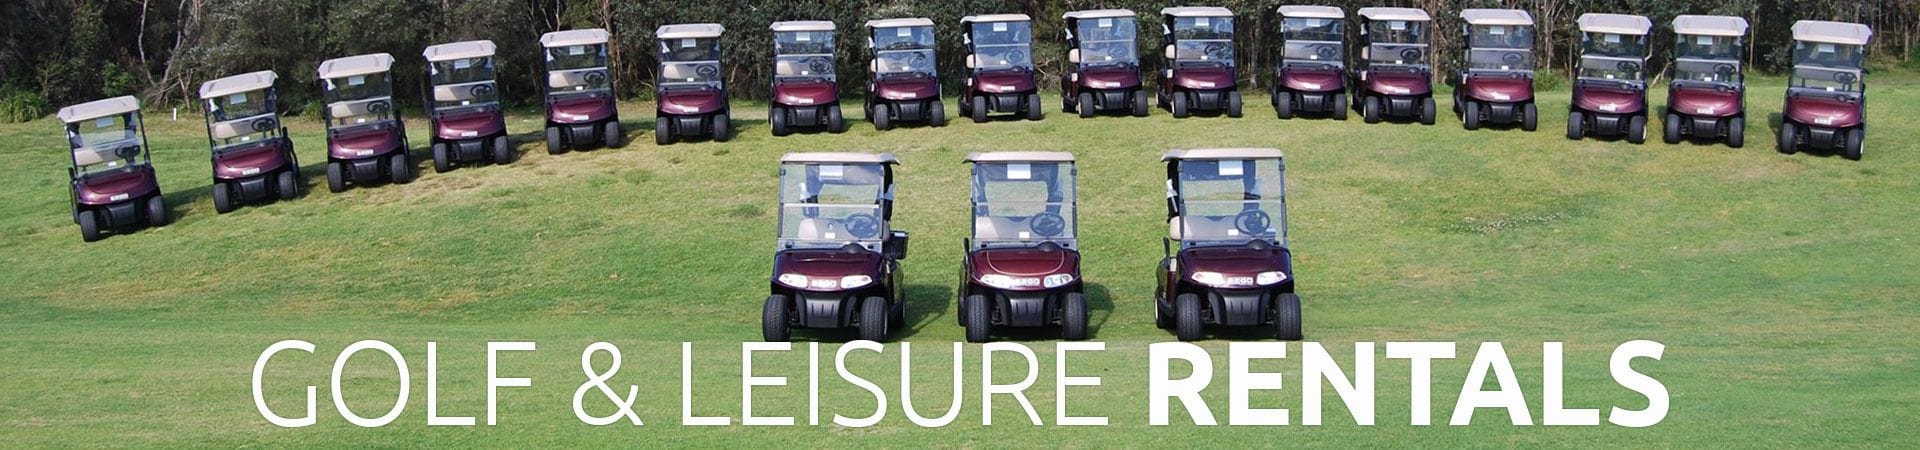 Golf and Leisure Vehicle Rentals | Golf Car World